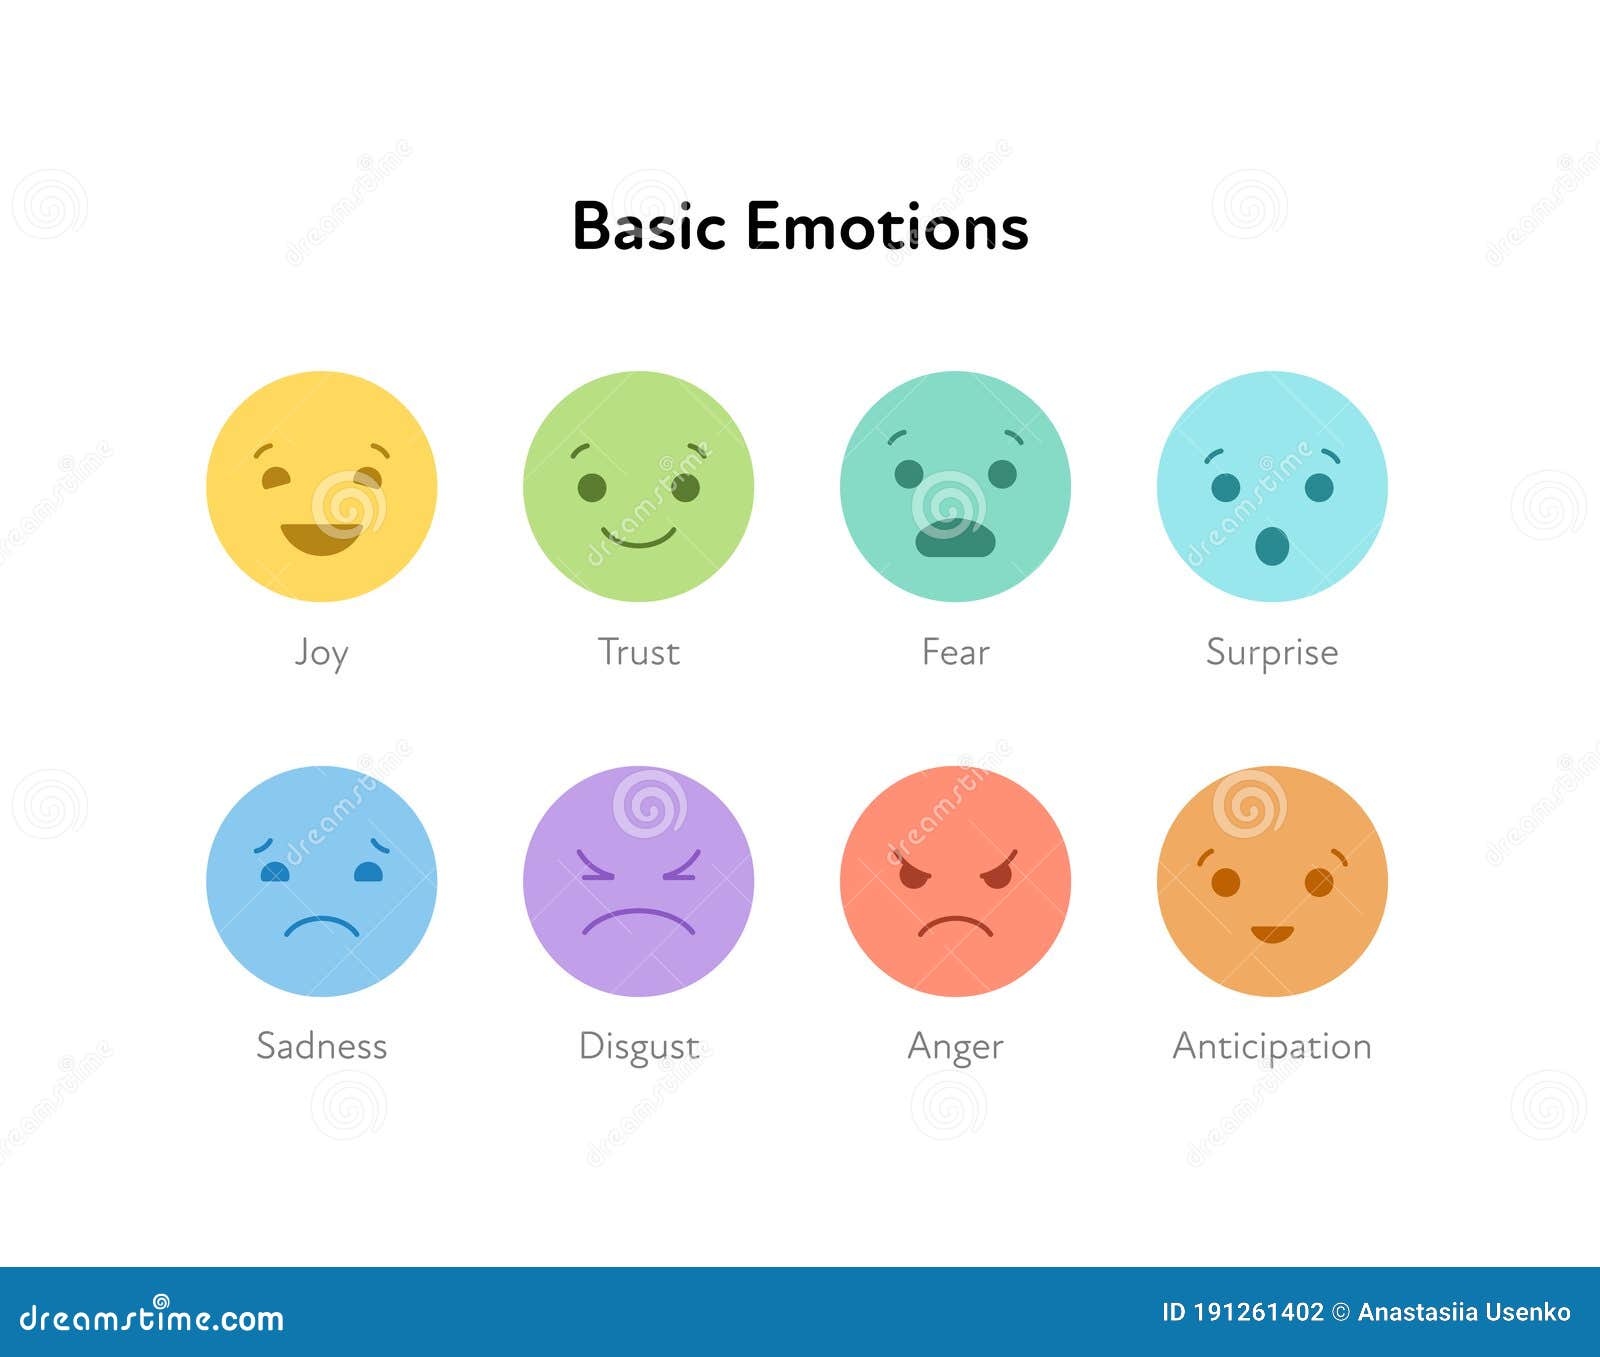 Sad And In Bad Mood Emoticon Girl Woman Icon Vector Illustration